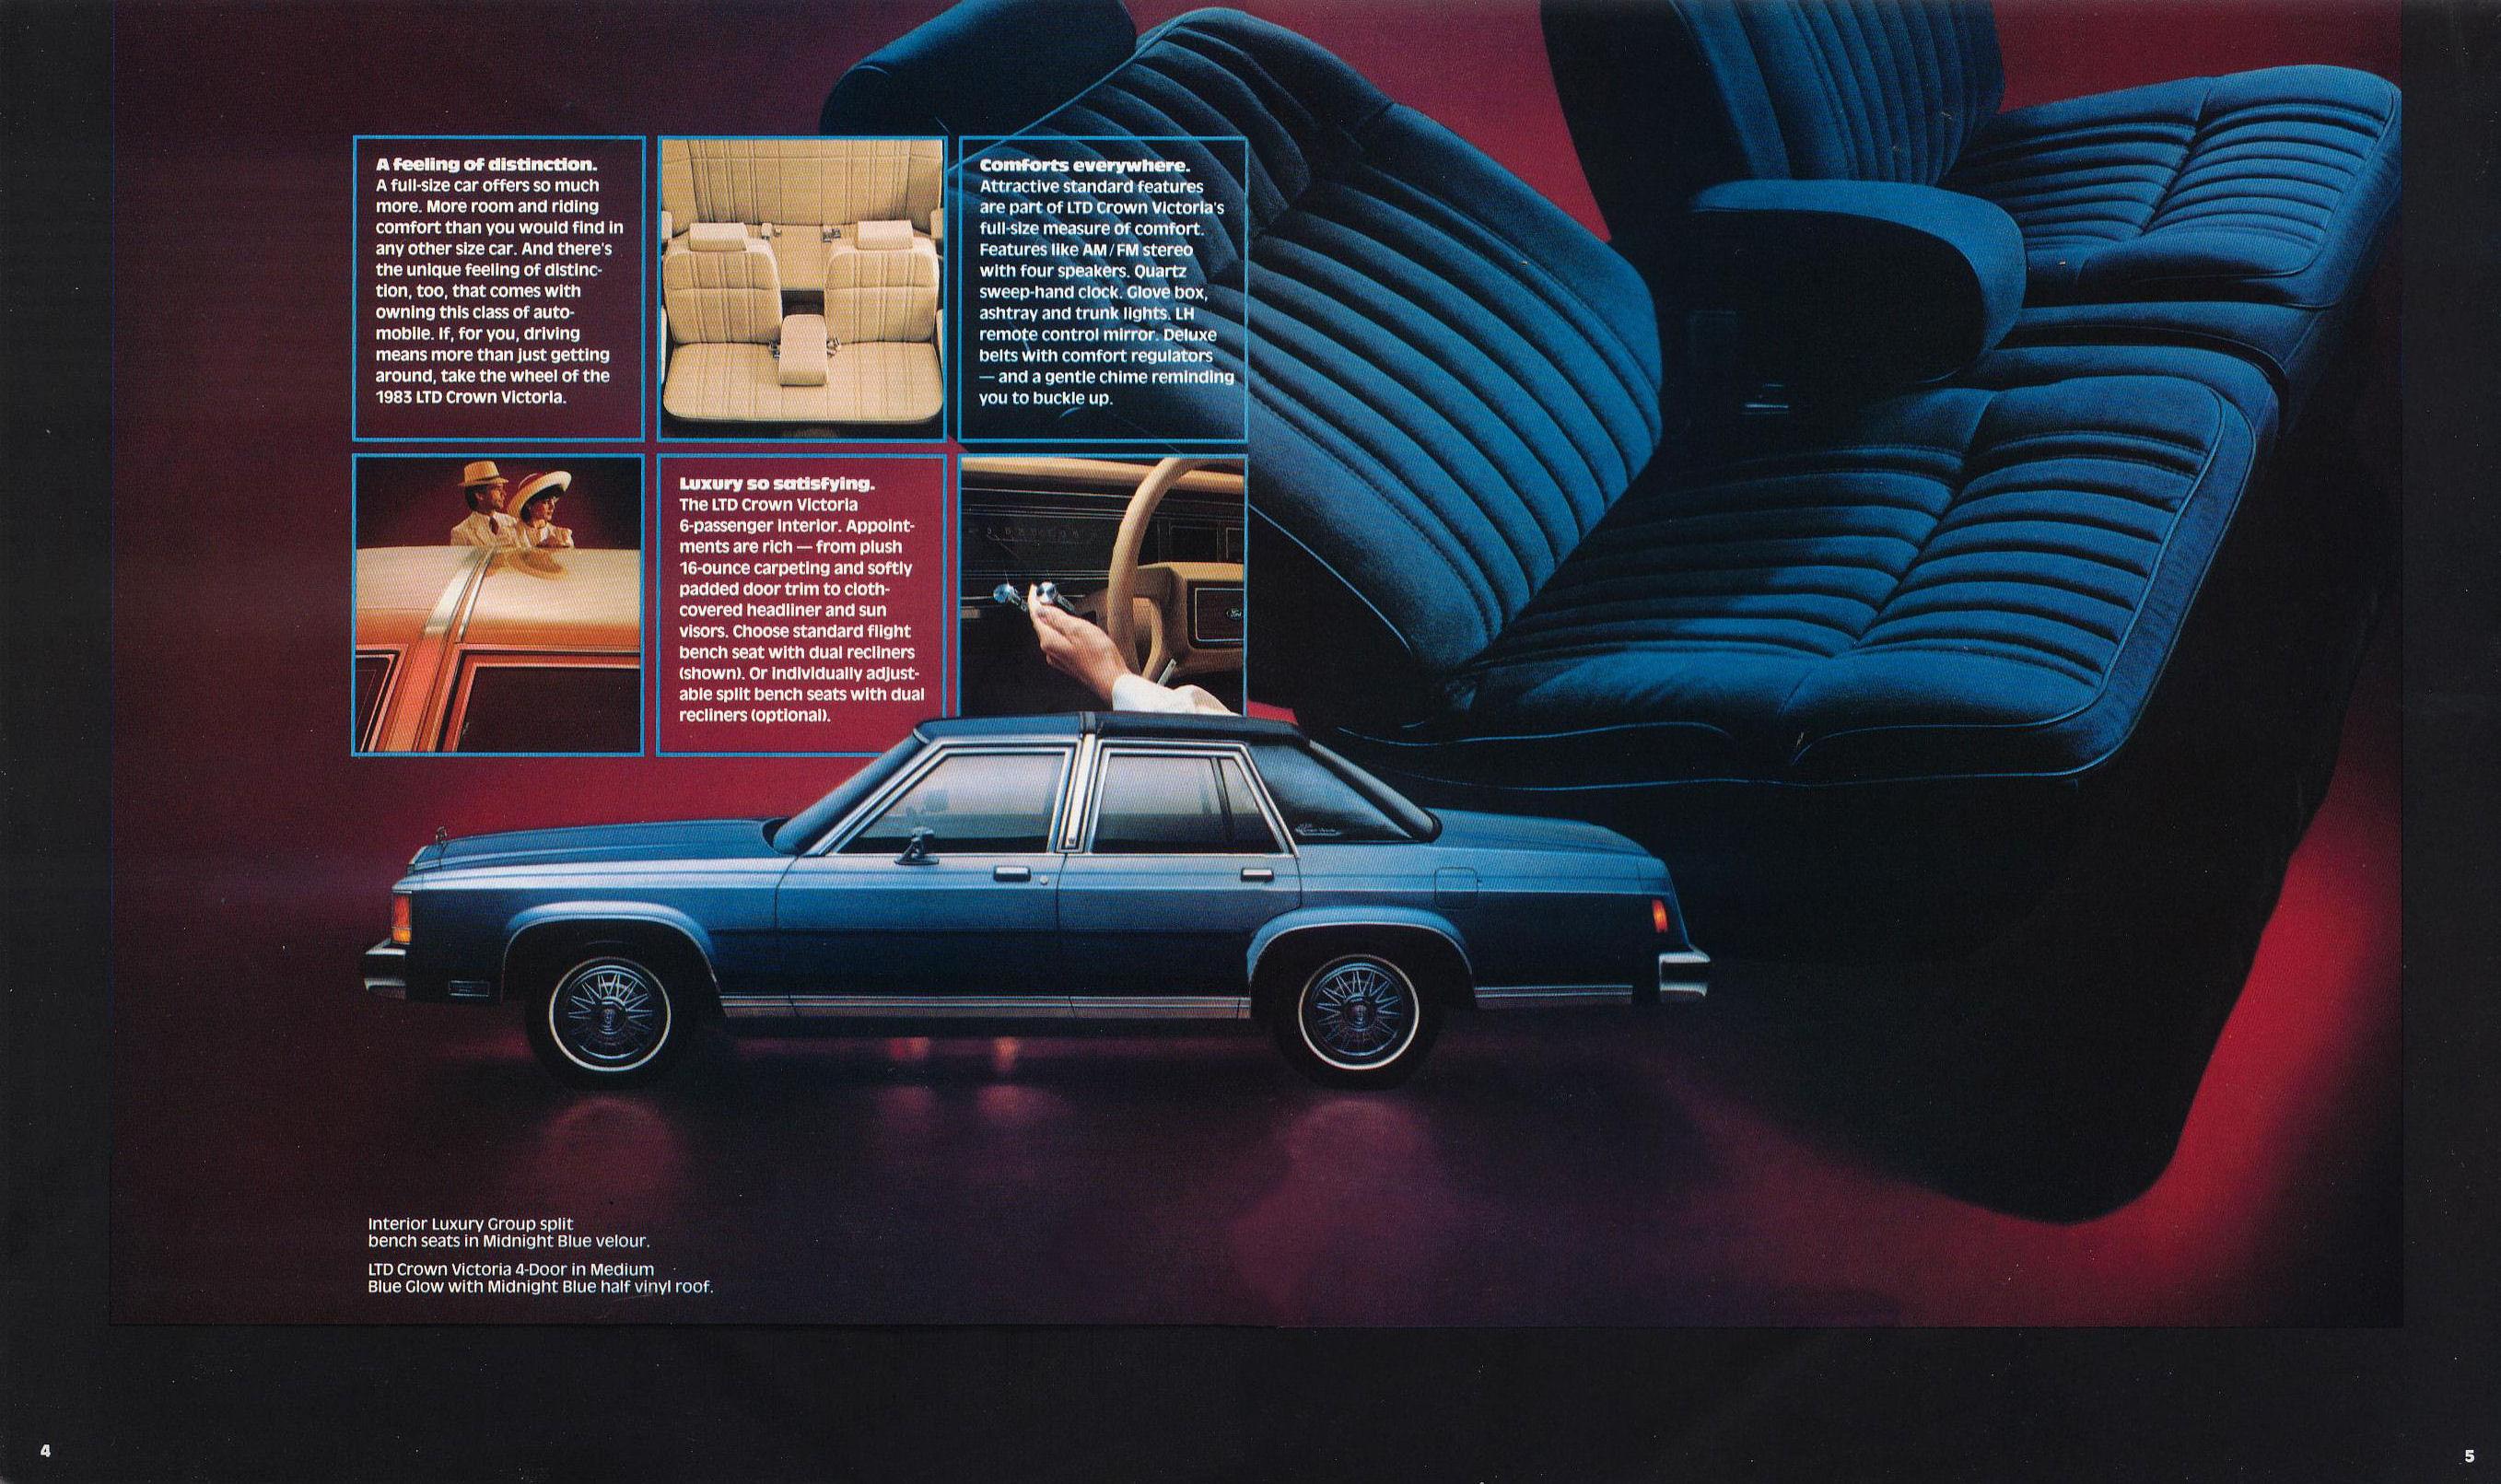 1983 Ford LTD Crown Victoria-04-05